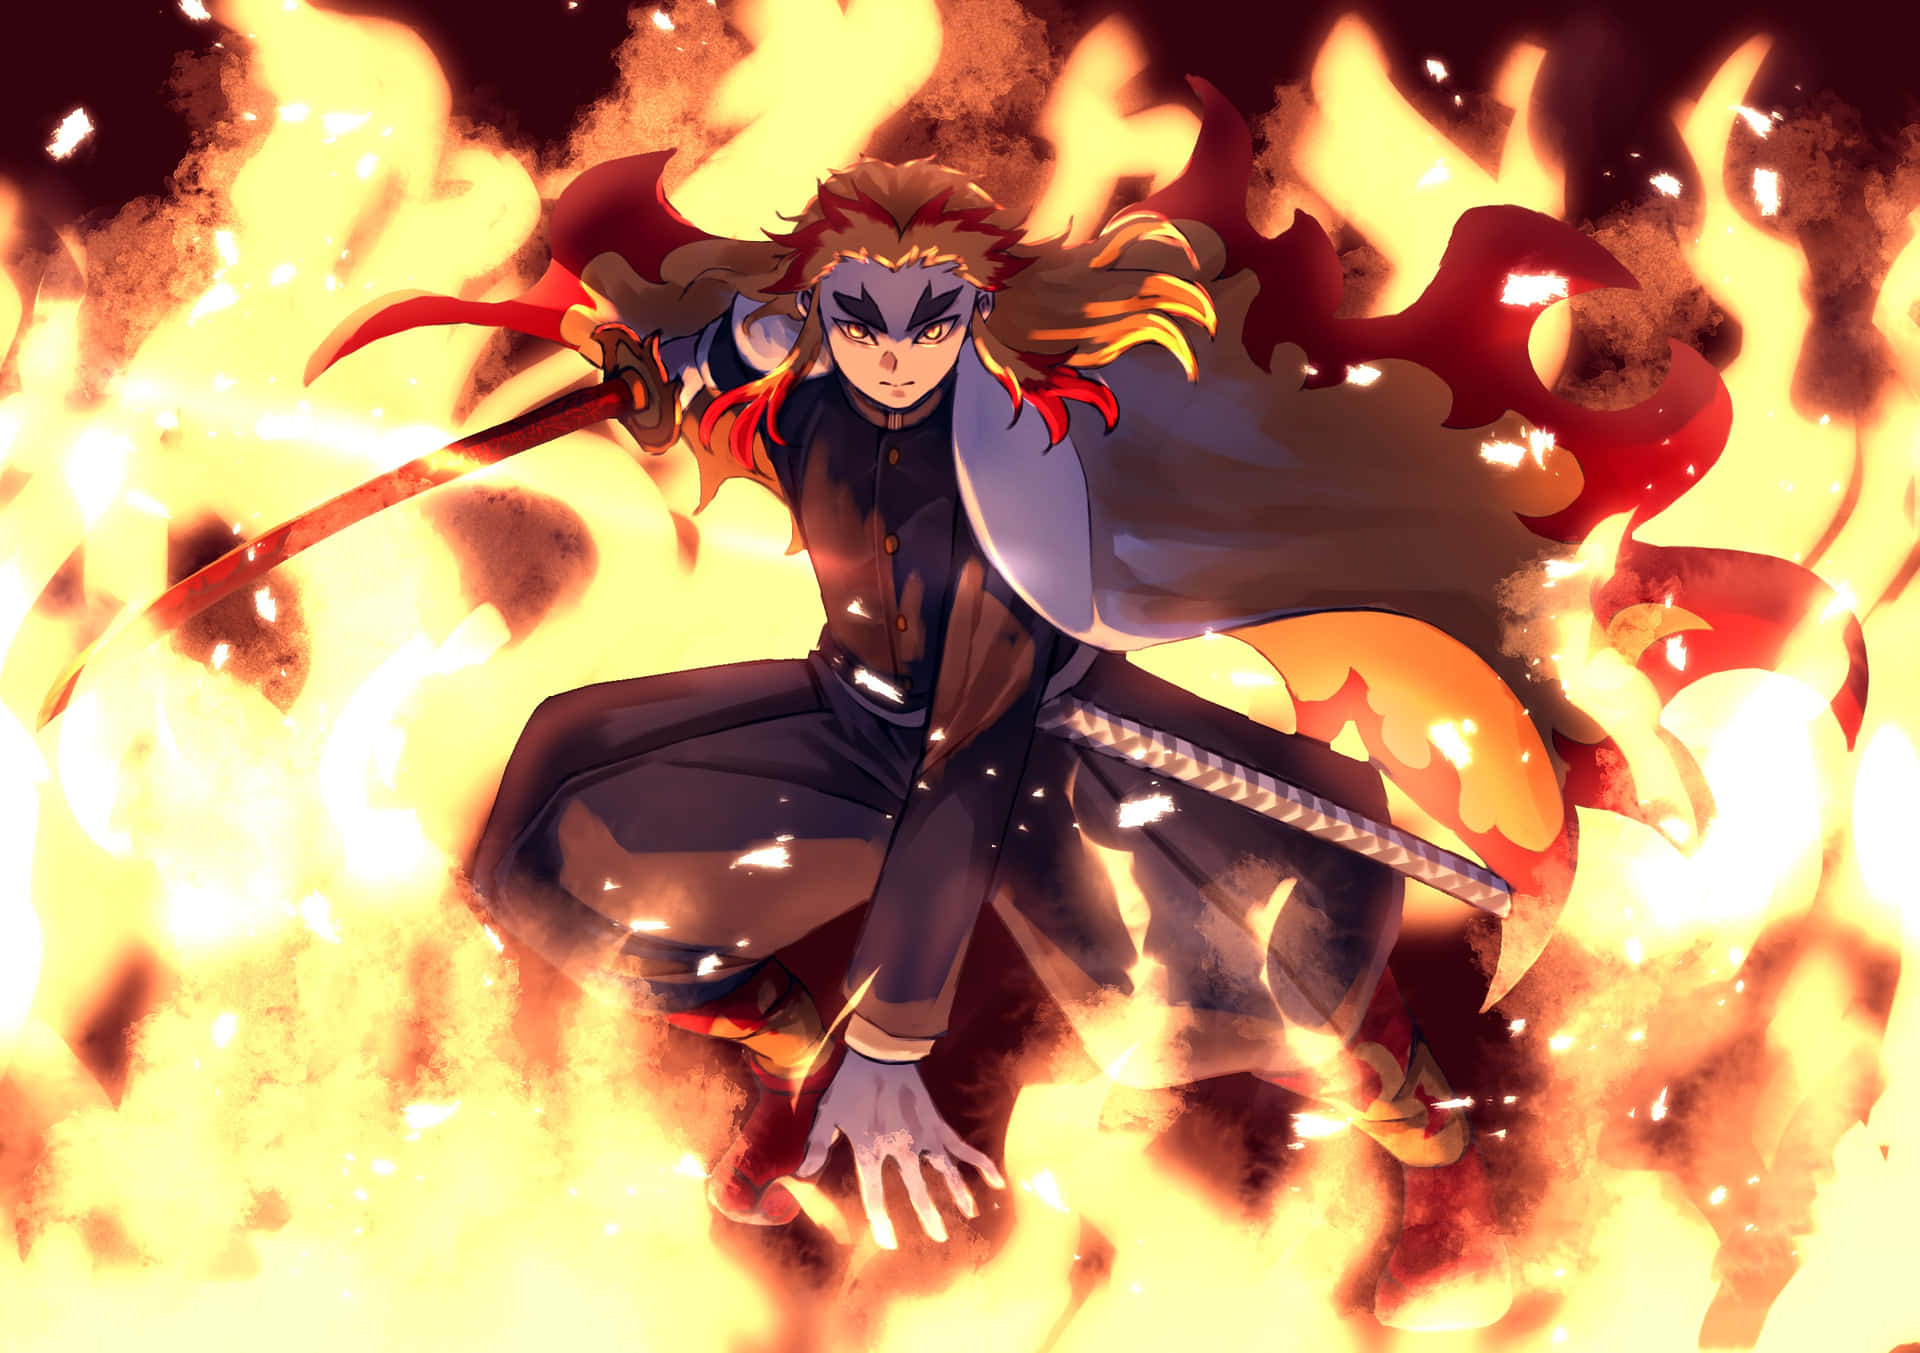 Rengoku, the Flame Hashira, in a fiery action pose.